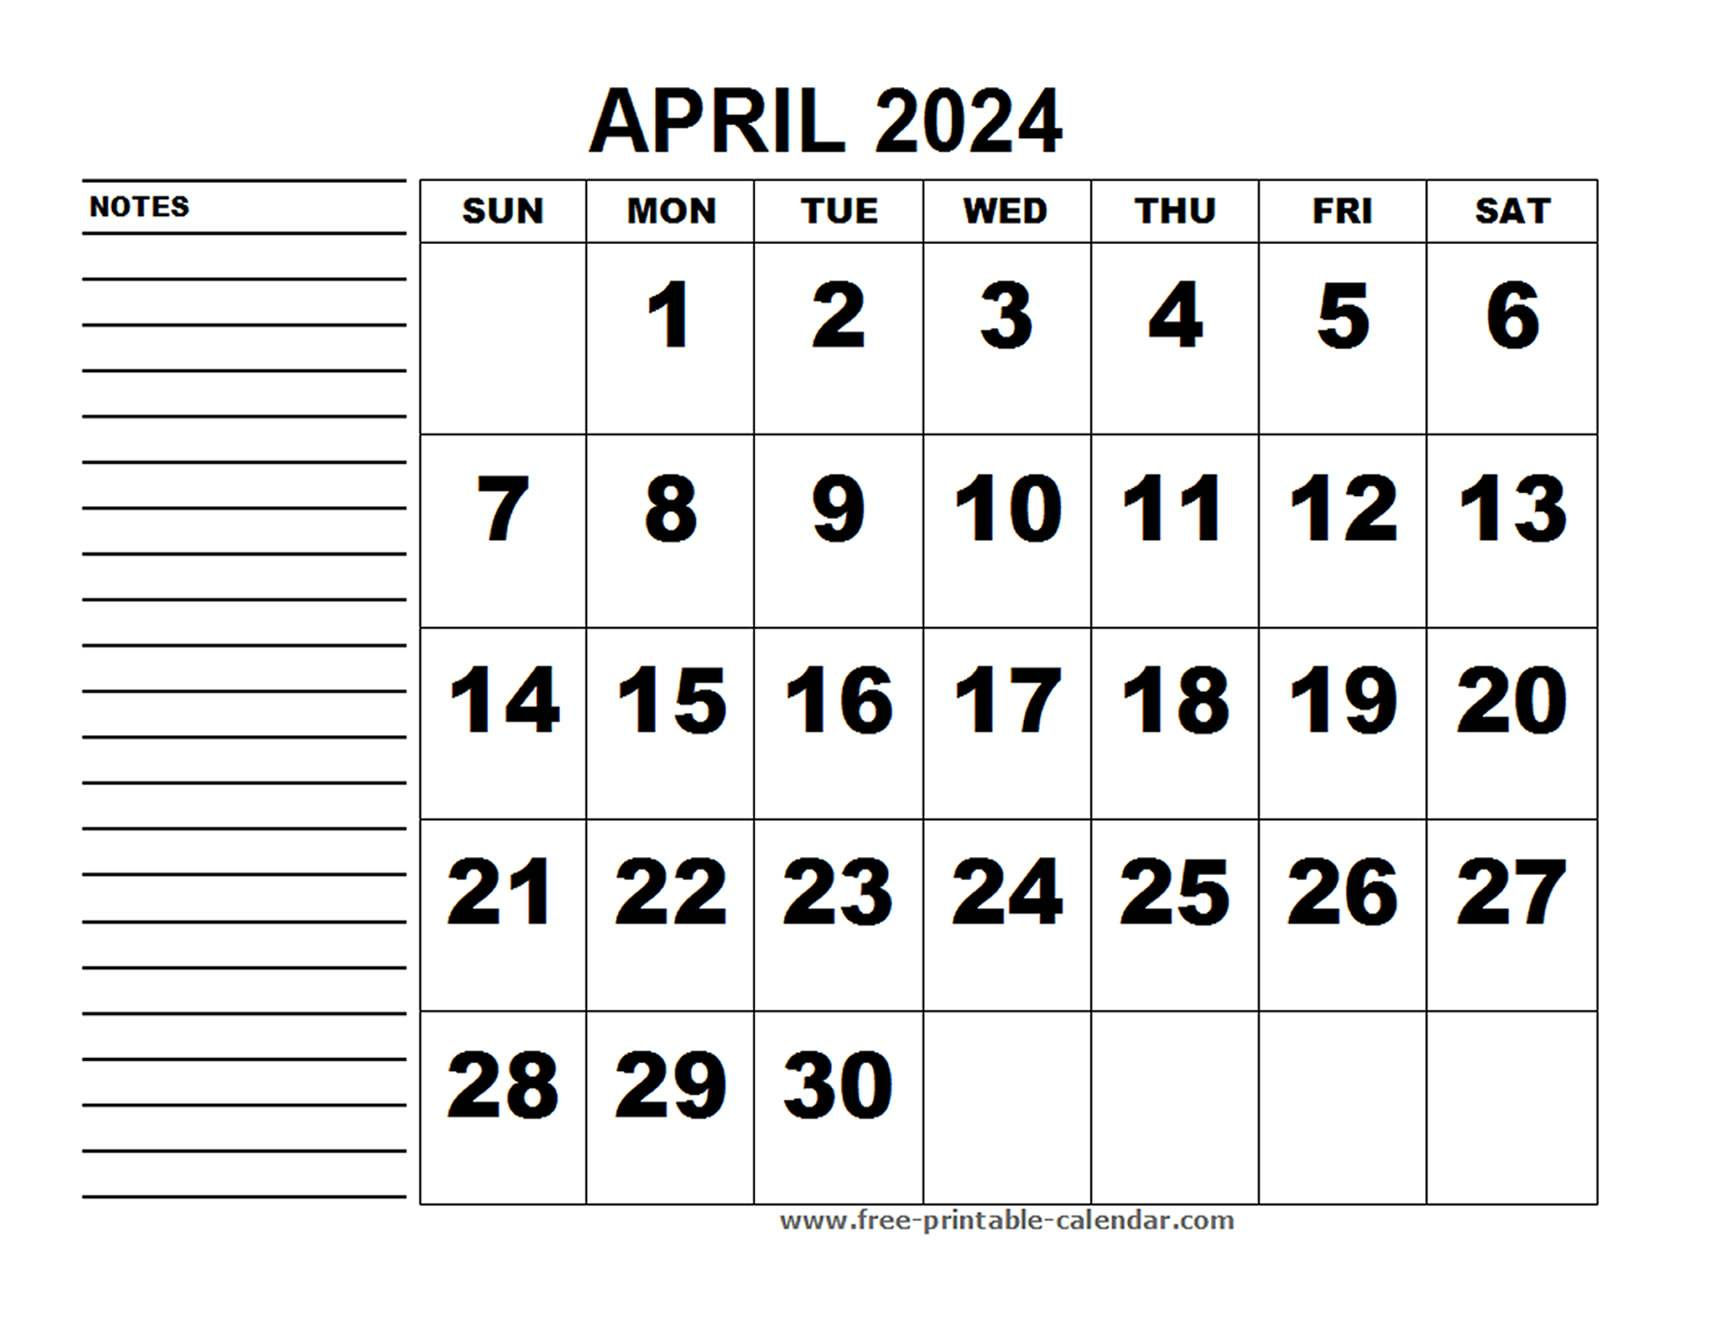 Printable Calendar April 2024 - Free-Printable-Calendar inside April 3 2024 Calendar